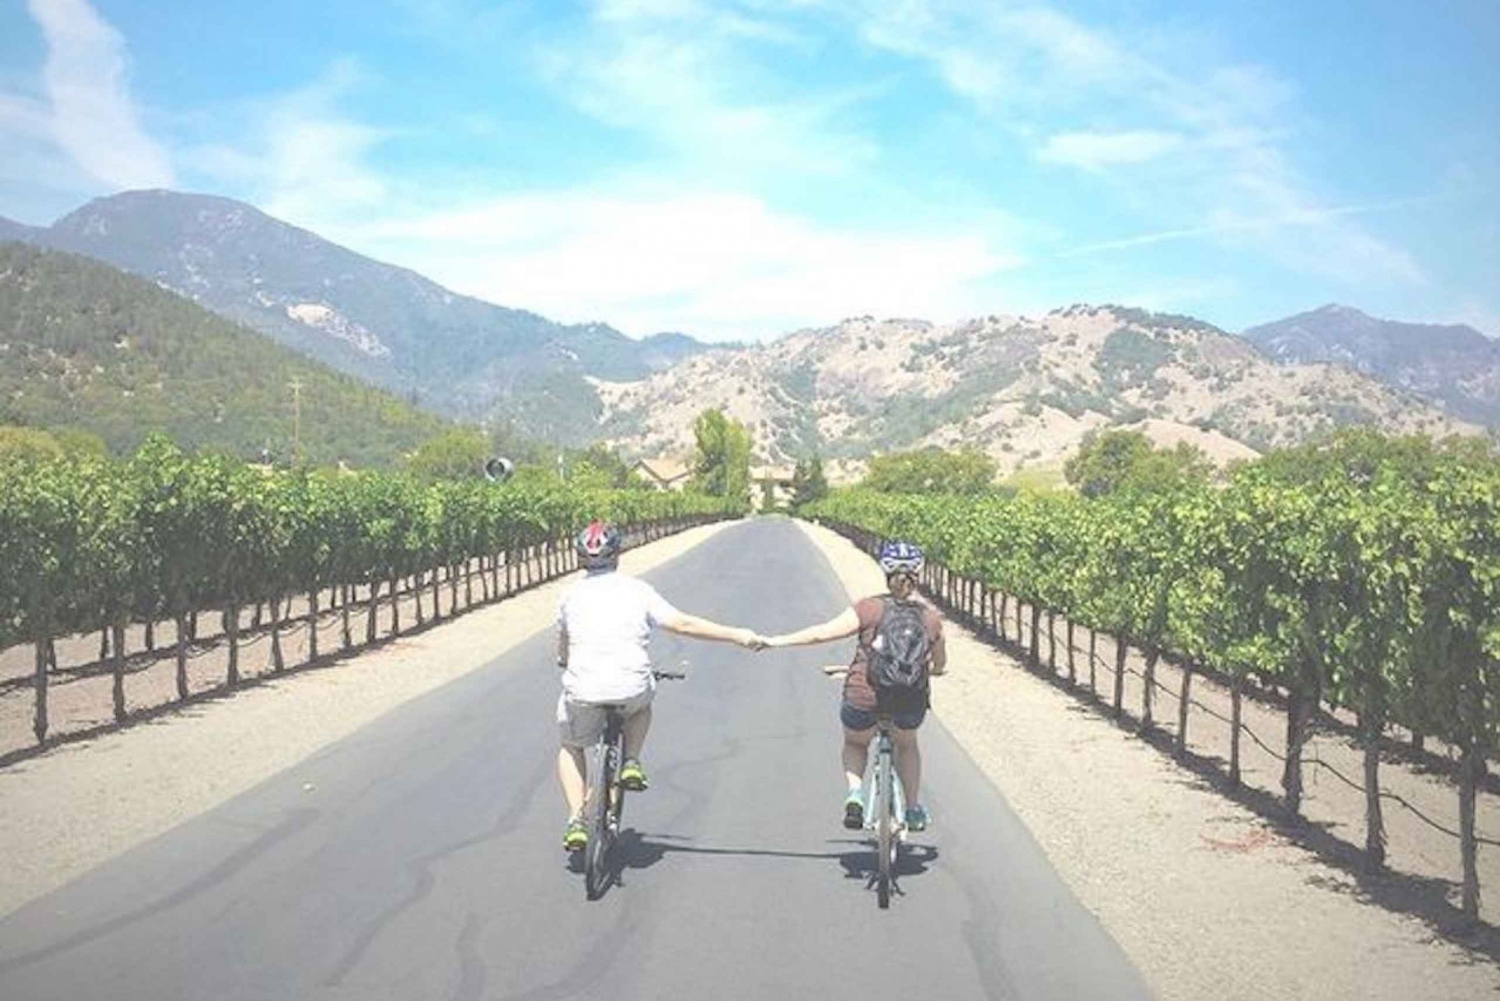 Sonoma County: Wine Tasting and Biking in Healdsburg